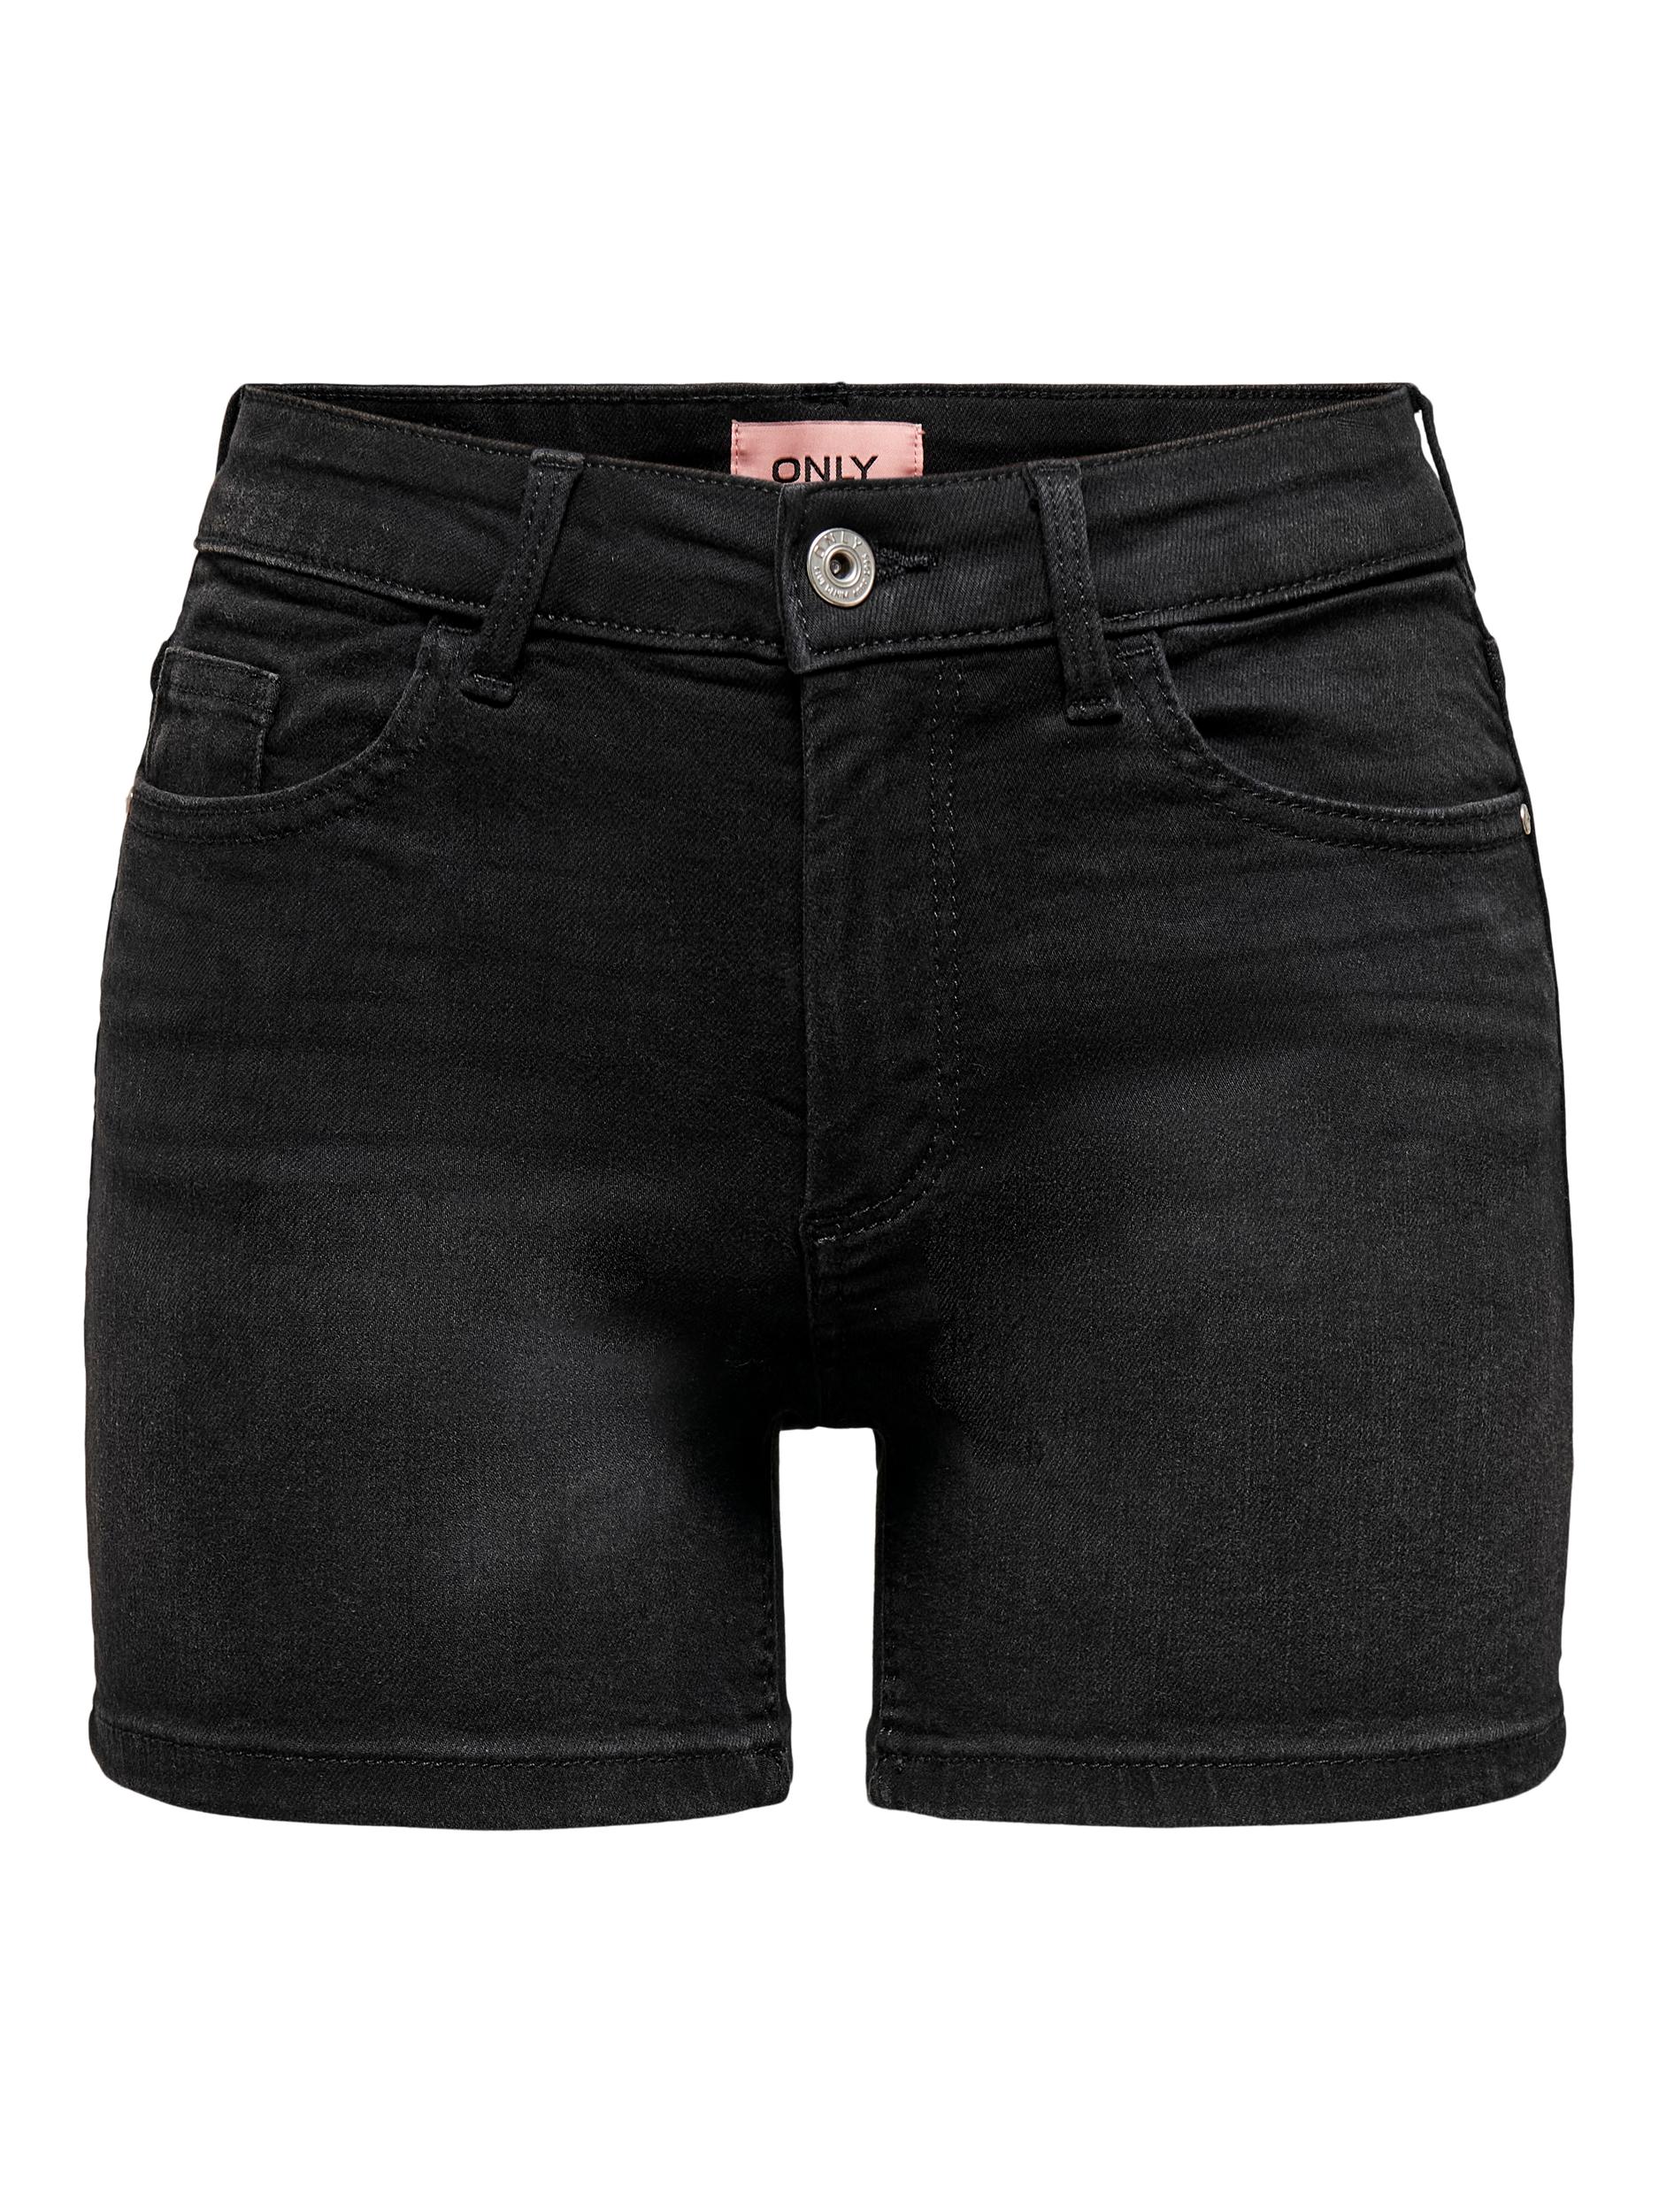 FINAL SALE - Blush mid waist regular fit shorts, BLACK DENIM, large